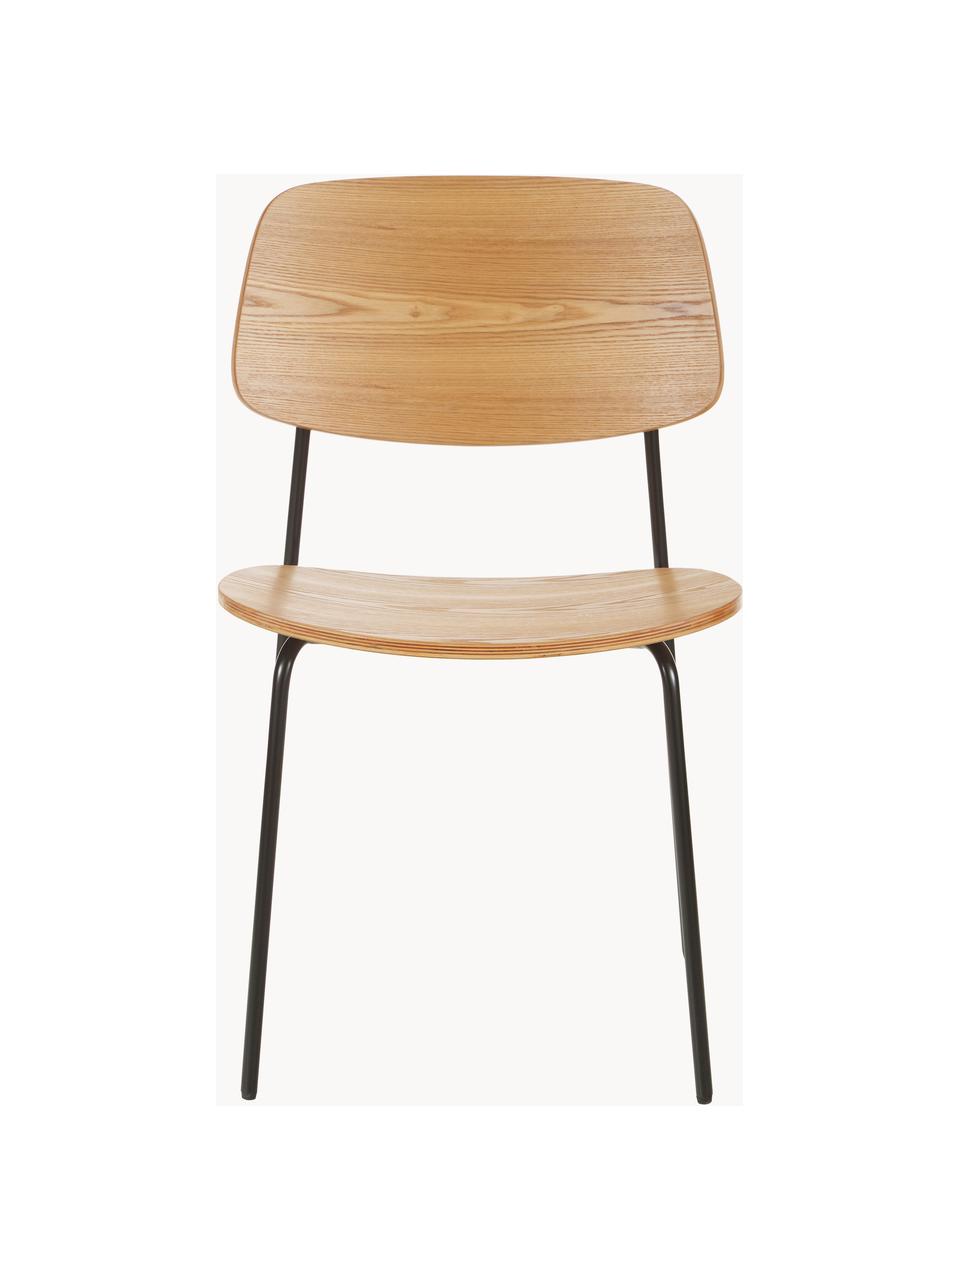 Holzstühle Nadja, 2 Stück, Sitzfläche: Sperrholz mit Eschenholzf, Beine: Metall, pulverbeschichtet, Eschenholz, B 50 x T 53 cm